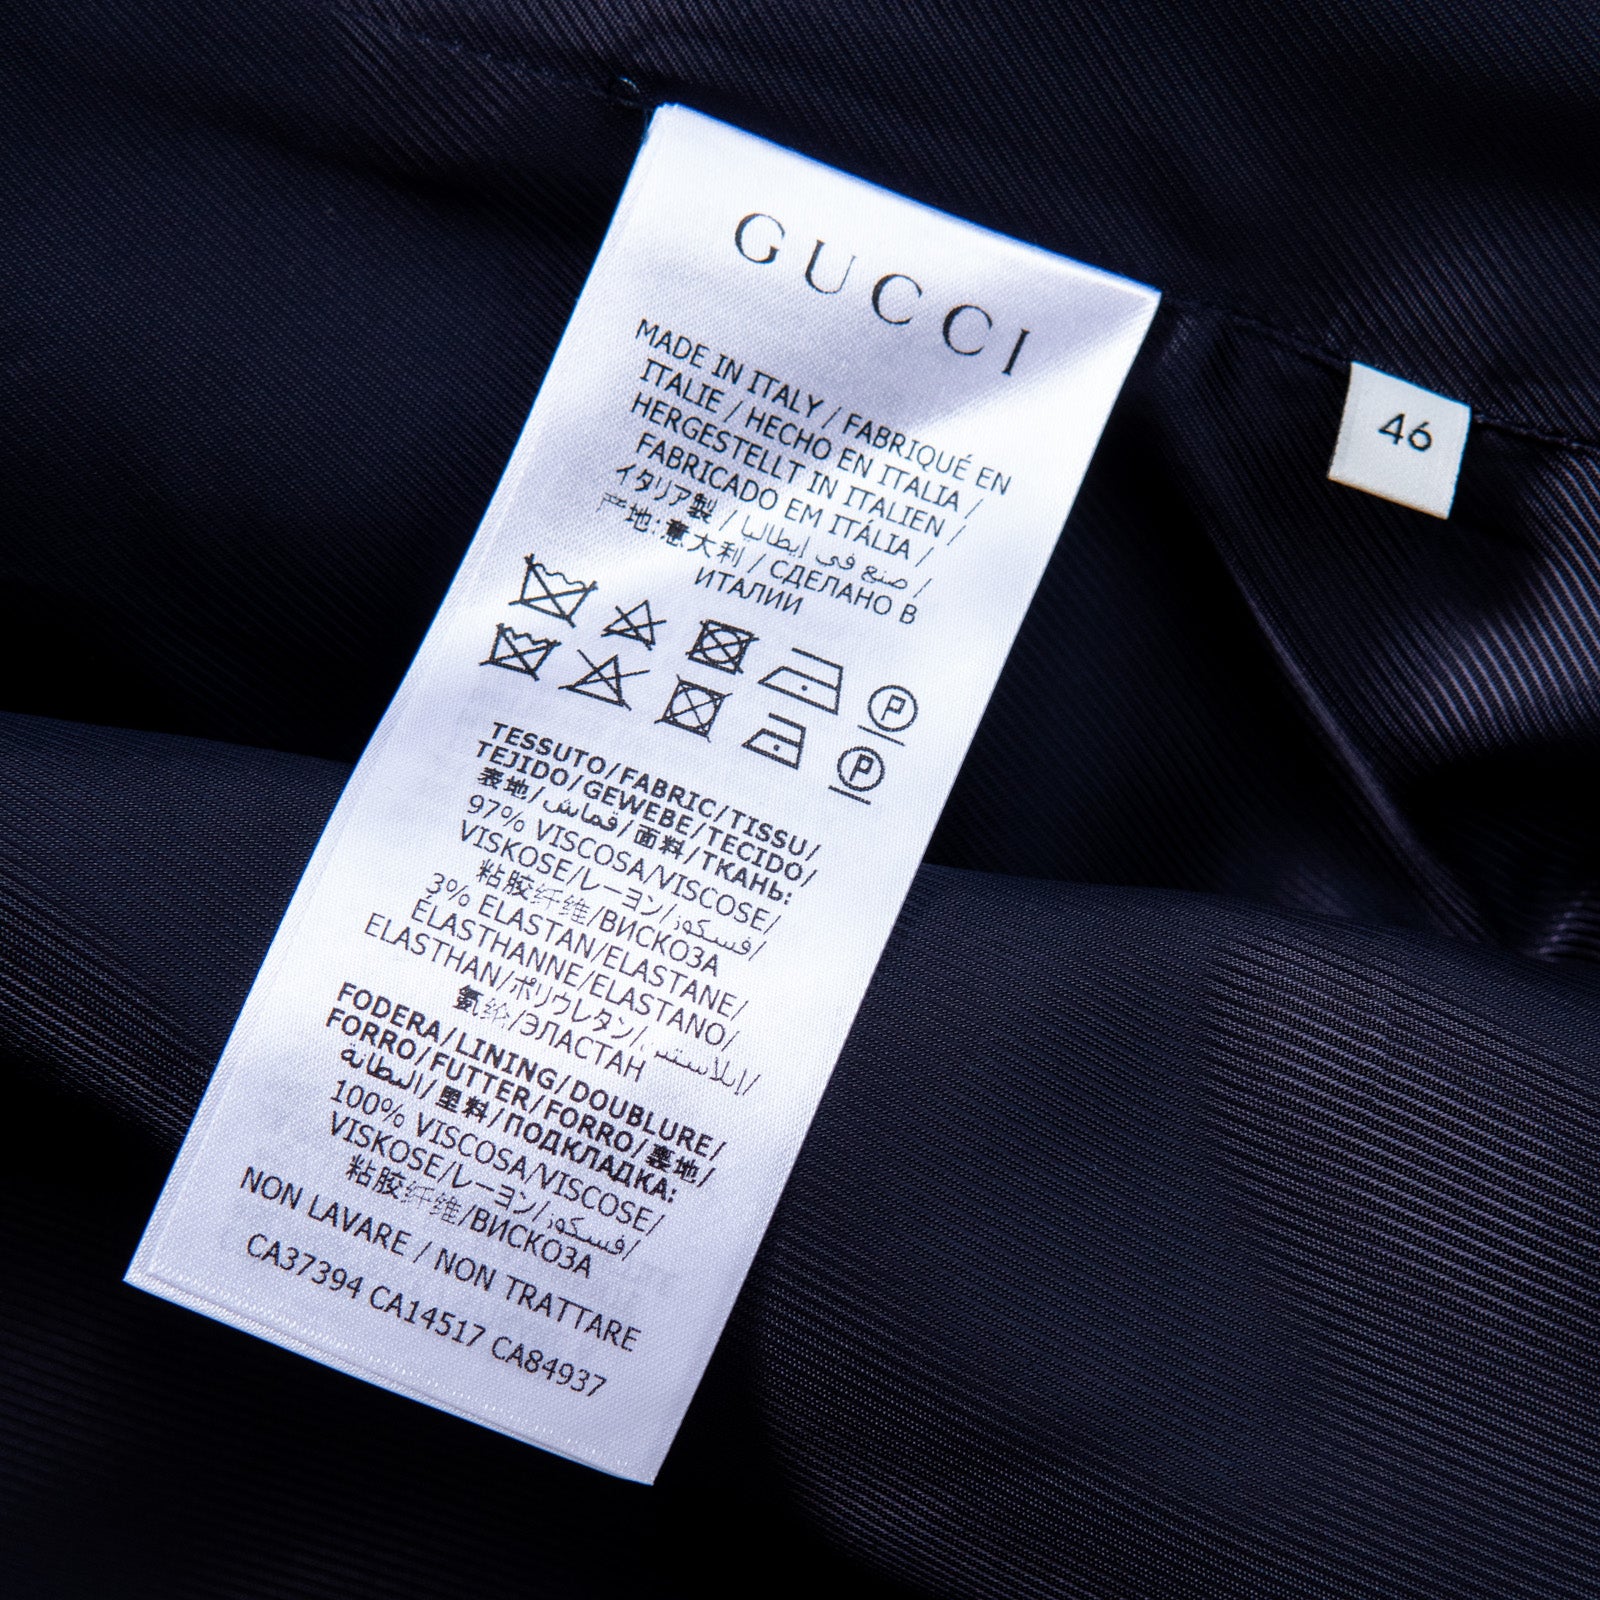 Gucci Red Horsebit Print Jacket - Image 9 of 9